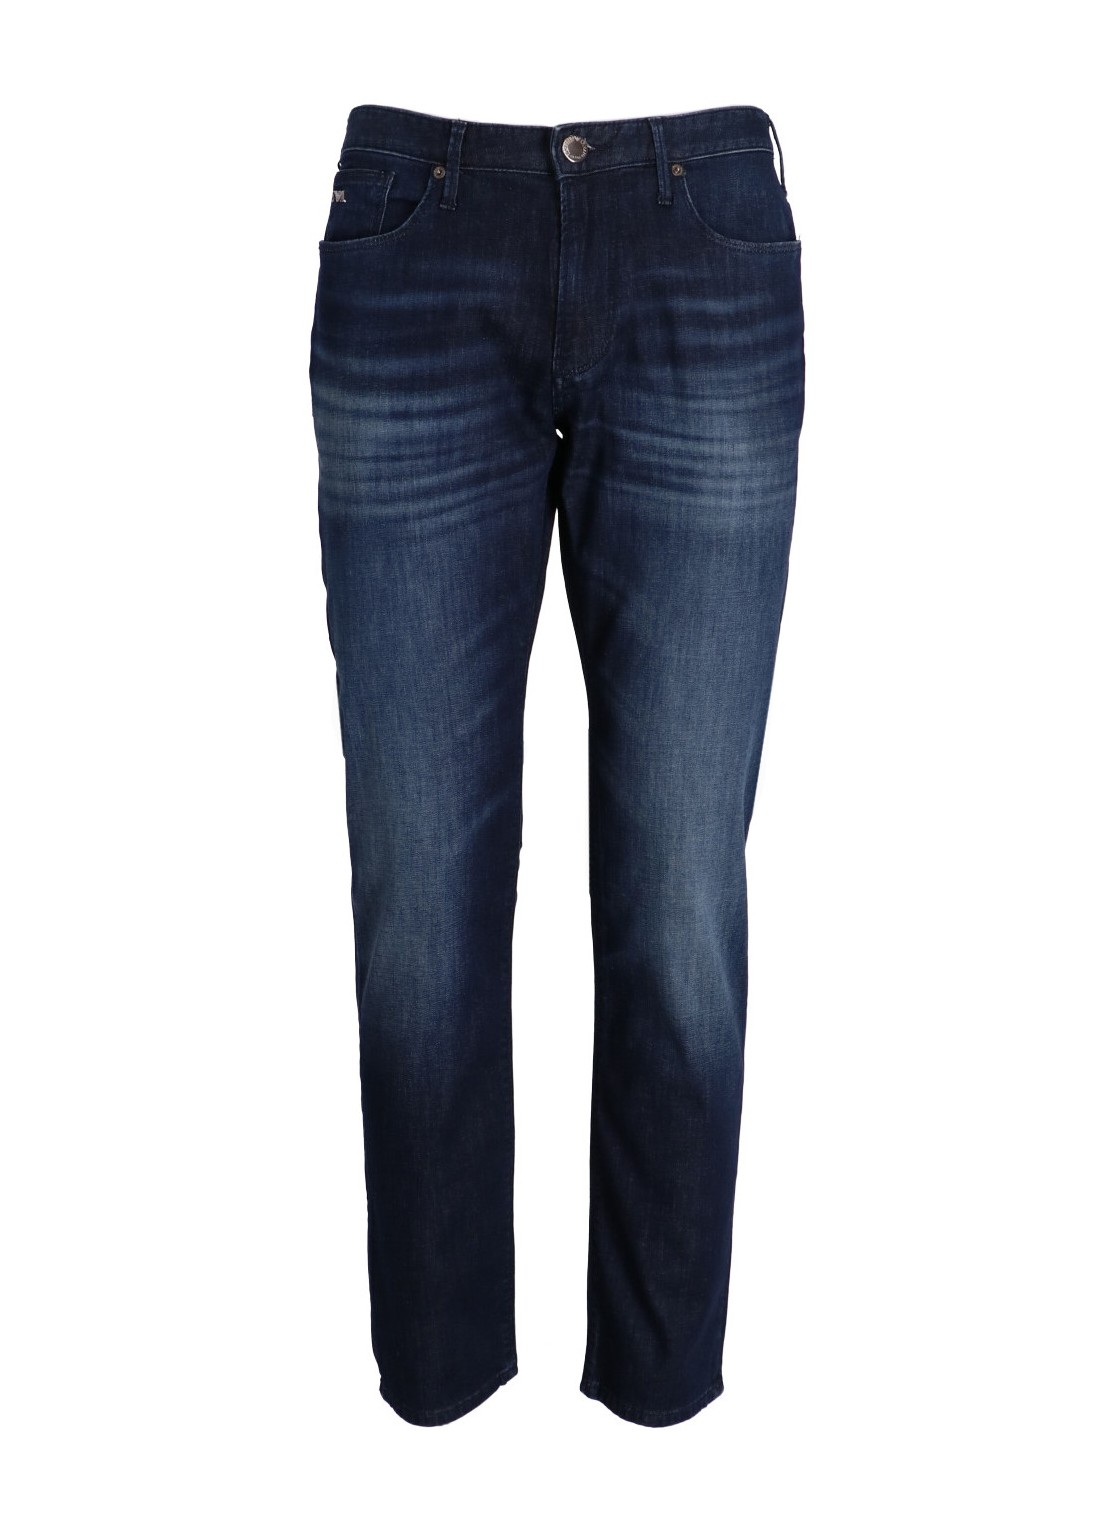 Pantalon jeans emporio armani denim manj06 - 8n1j061d16z 0942 talla Azul
 